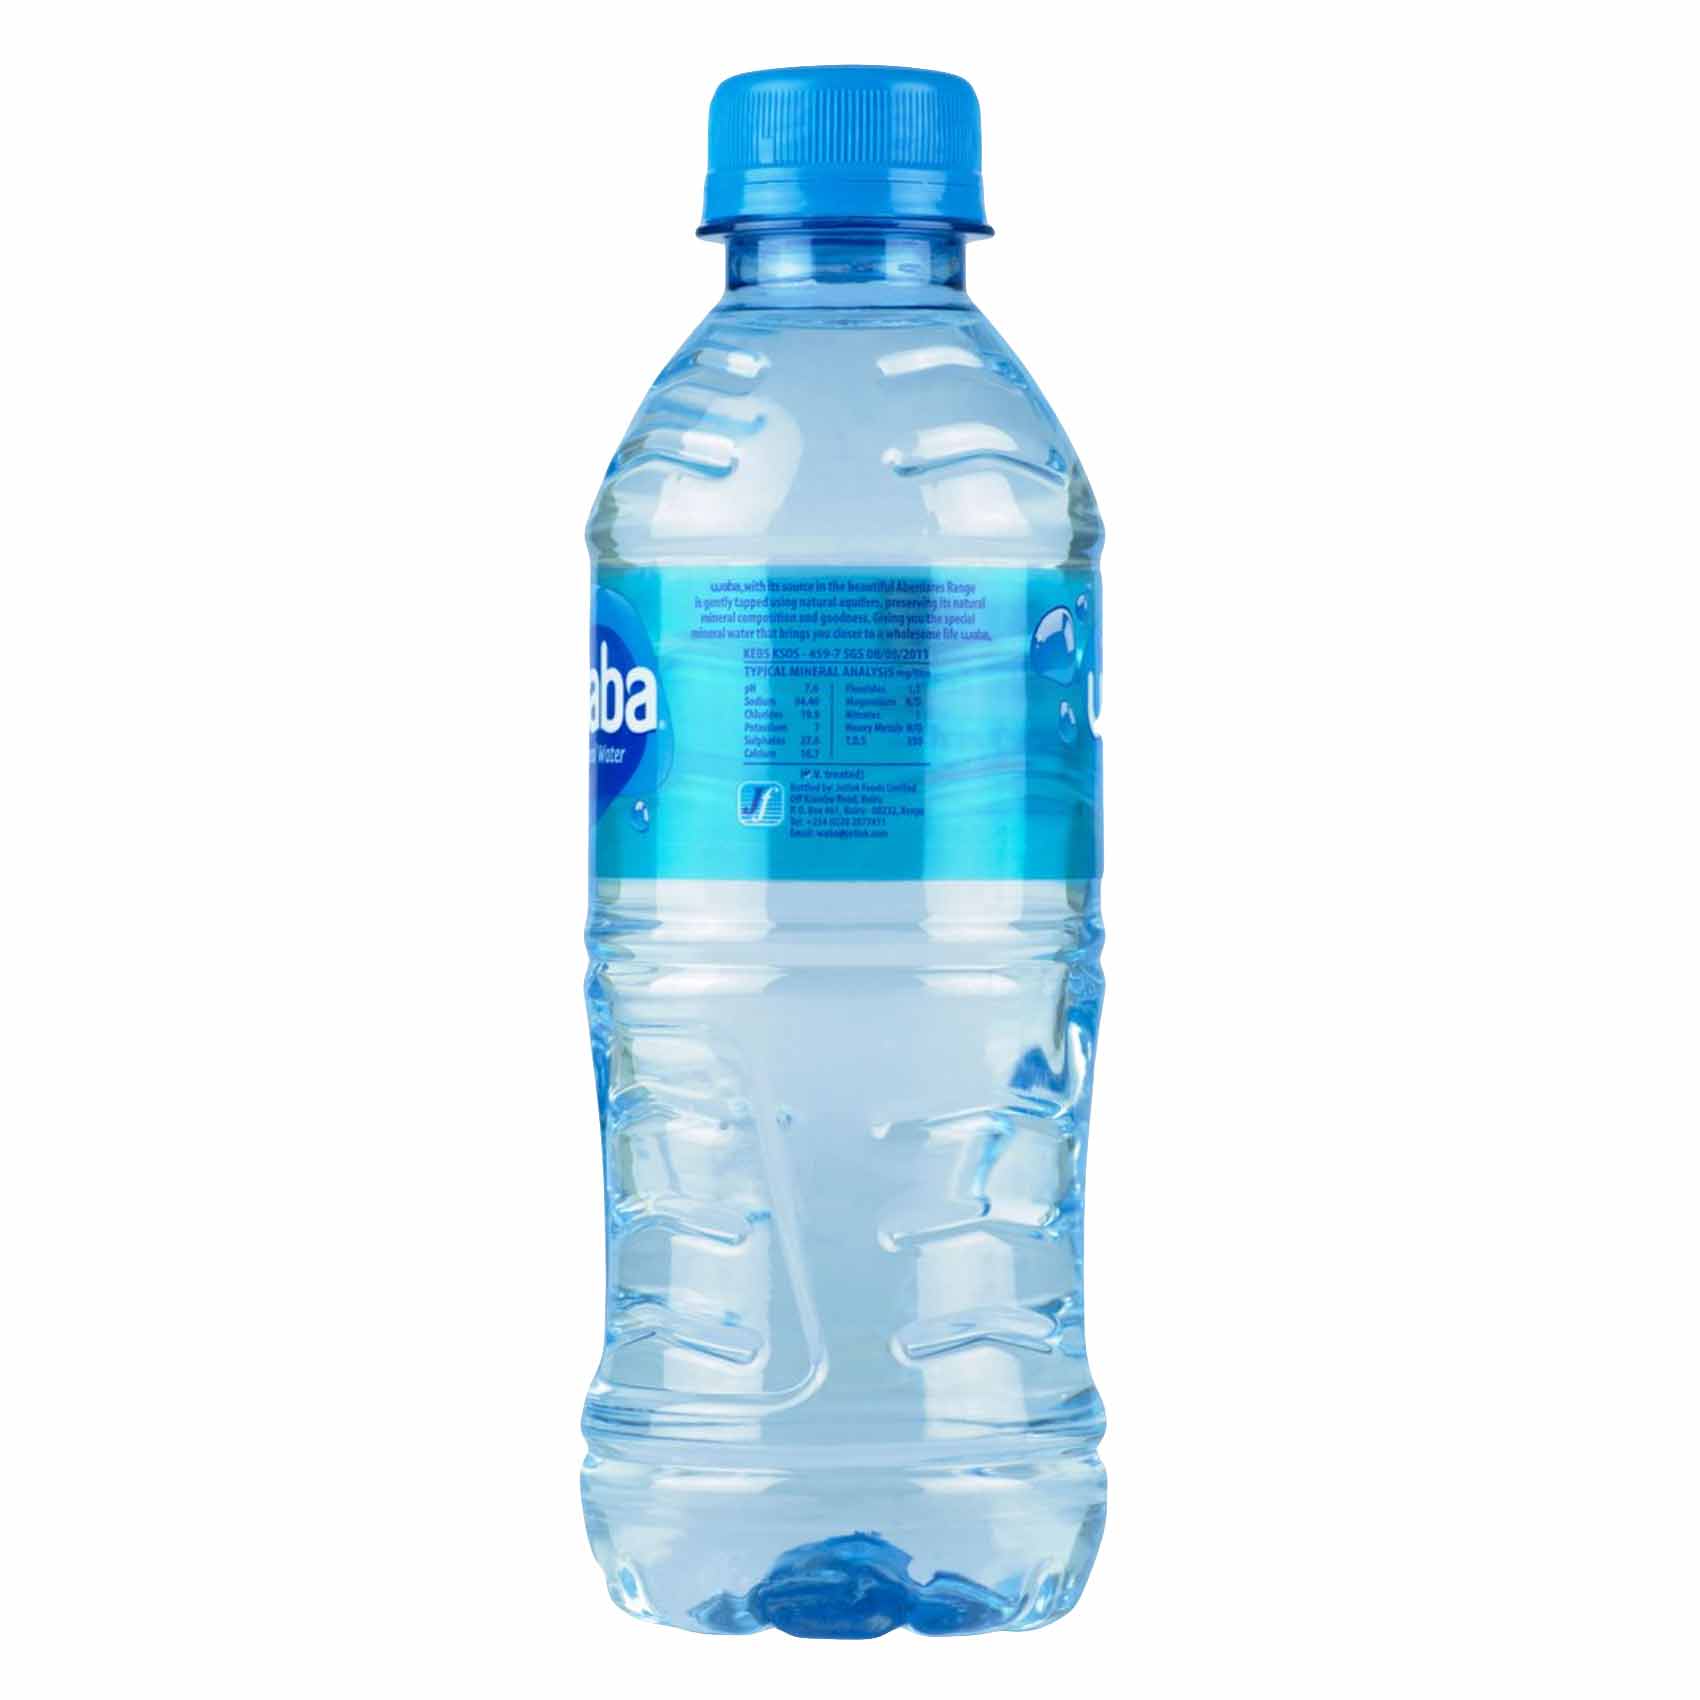 Waba Mineral Water 300ml